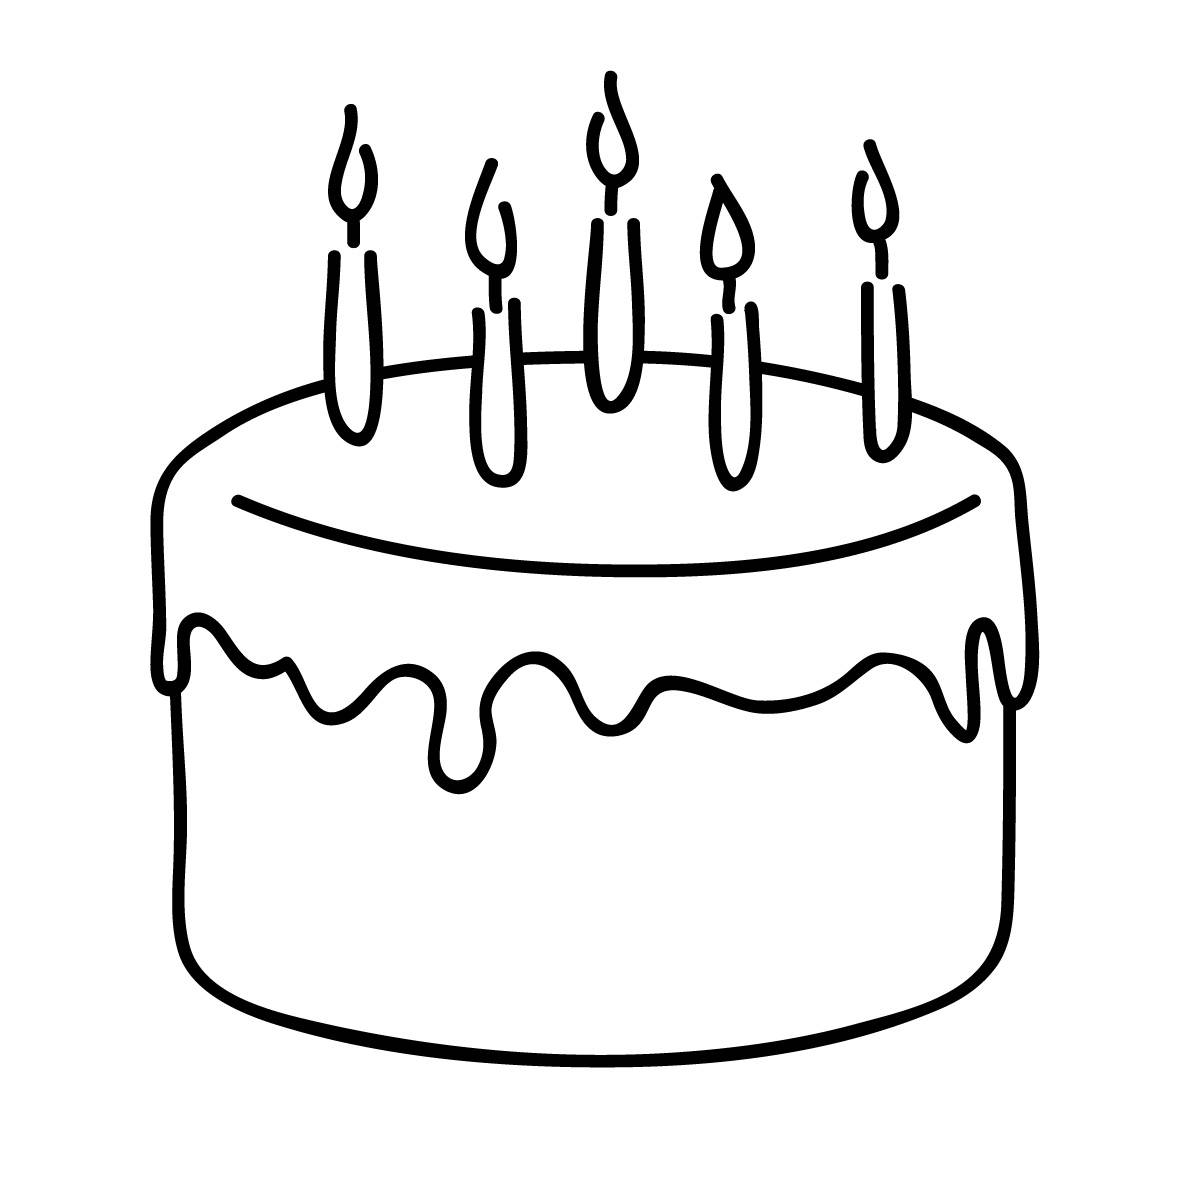 Happy birthday cake clipart black and white free - Clipartix